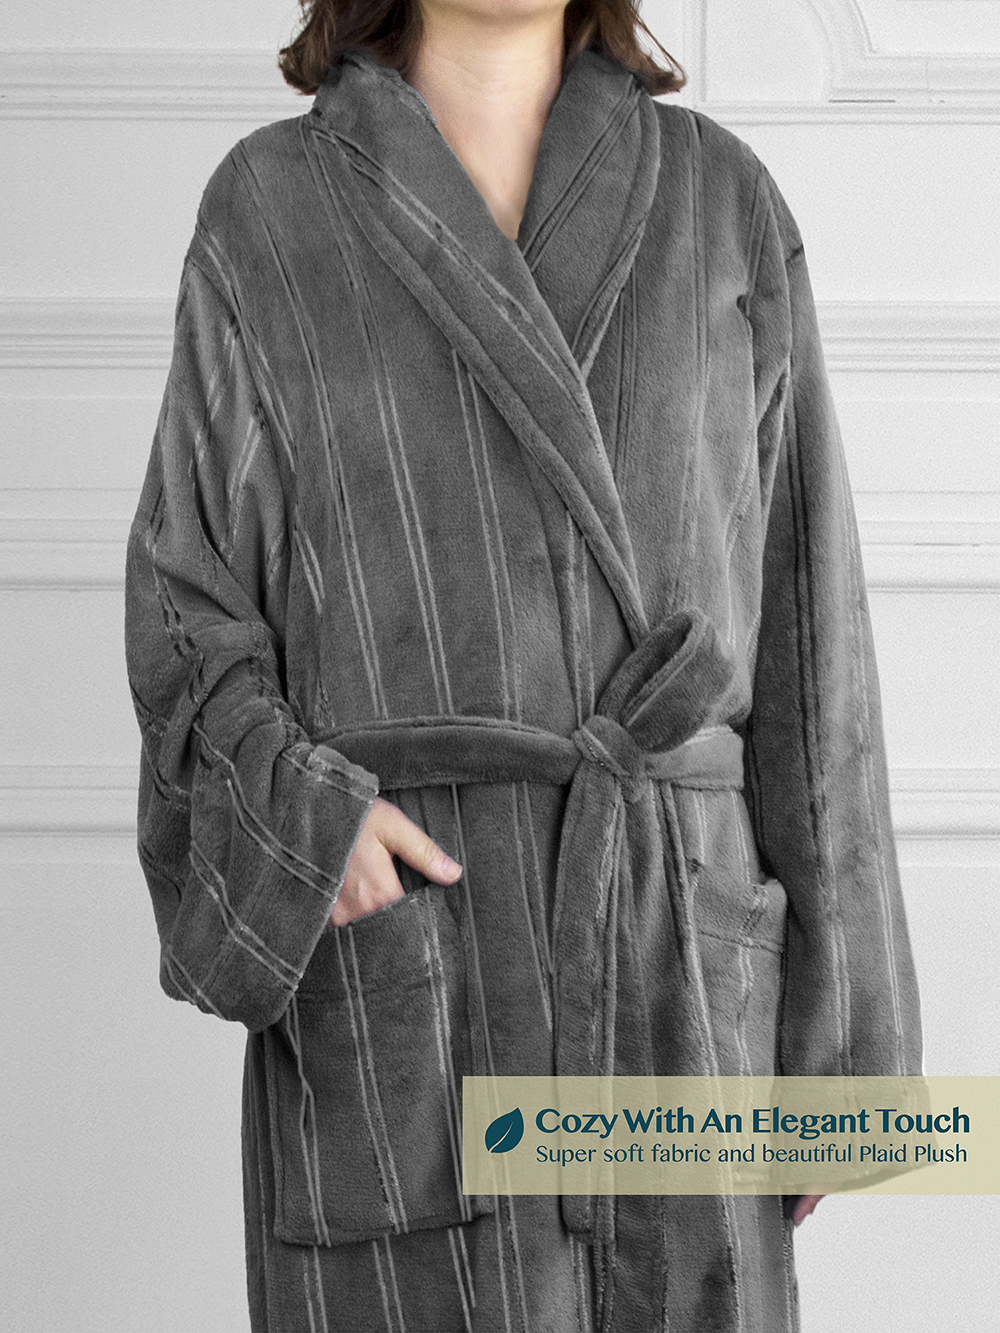 PAVILIA Mens Robe, Soft Robe for Men, Fleece Warm Long Bathrobe for Bath  Shower Spa with Shawl Collar and Pockets, Plush Microfiber - Light Gray